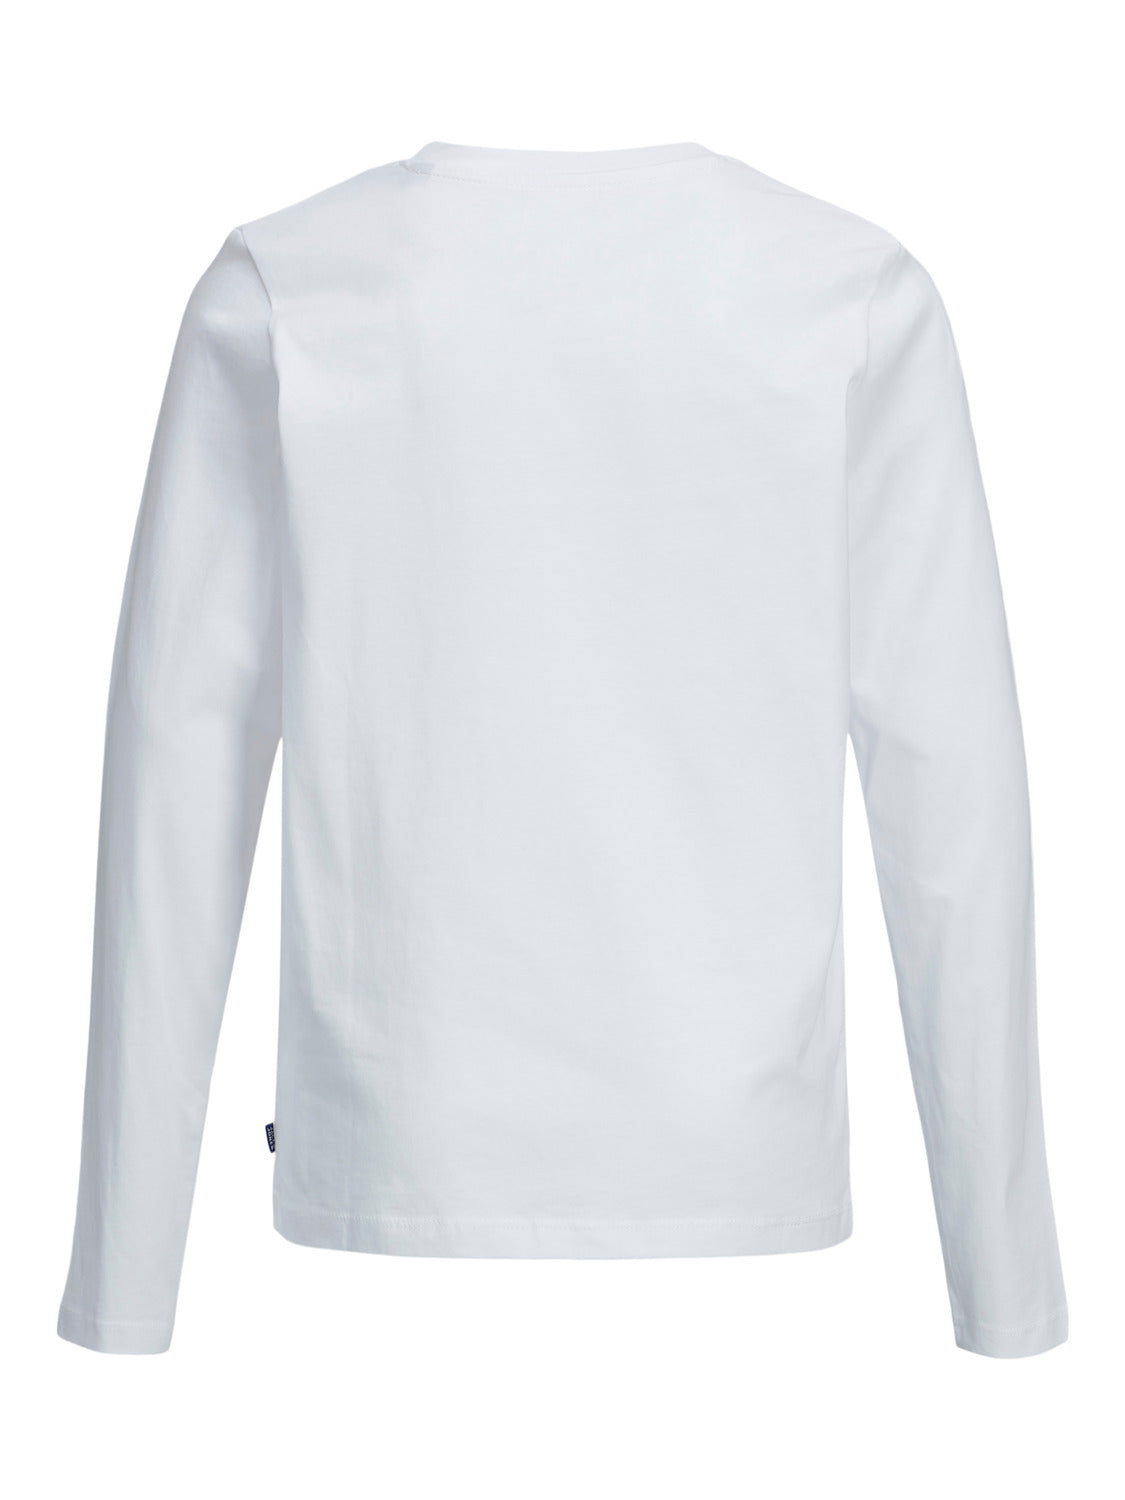 JJEORGANIC T-Shirt - White